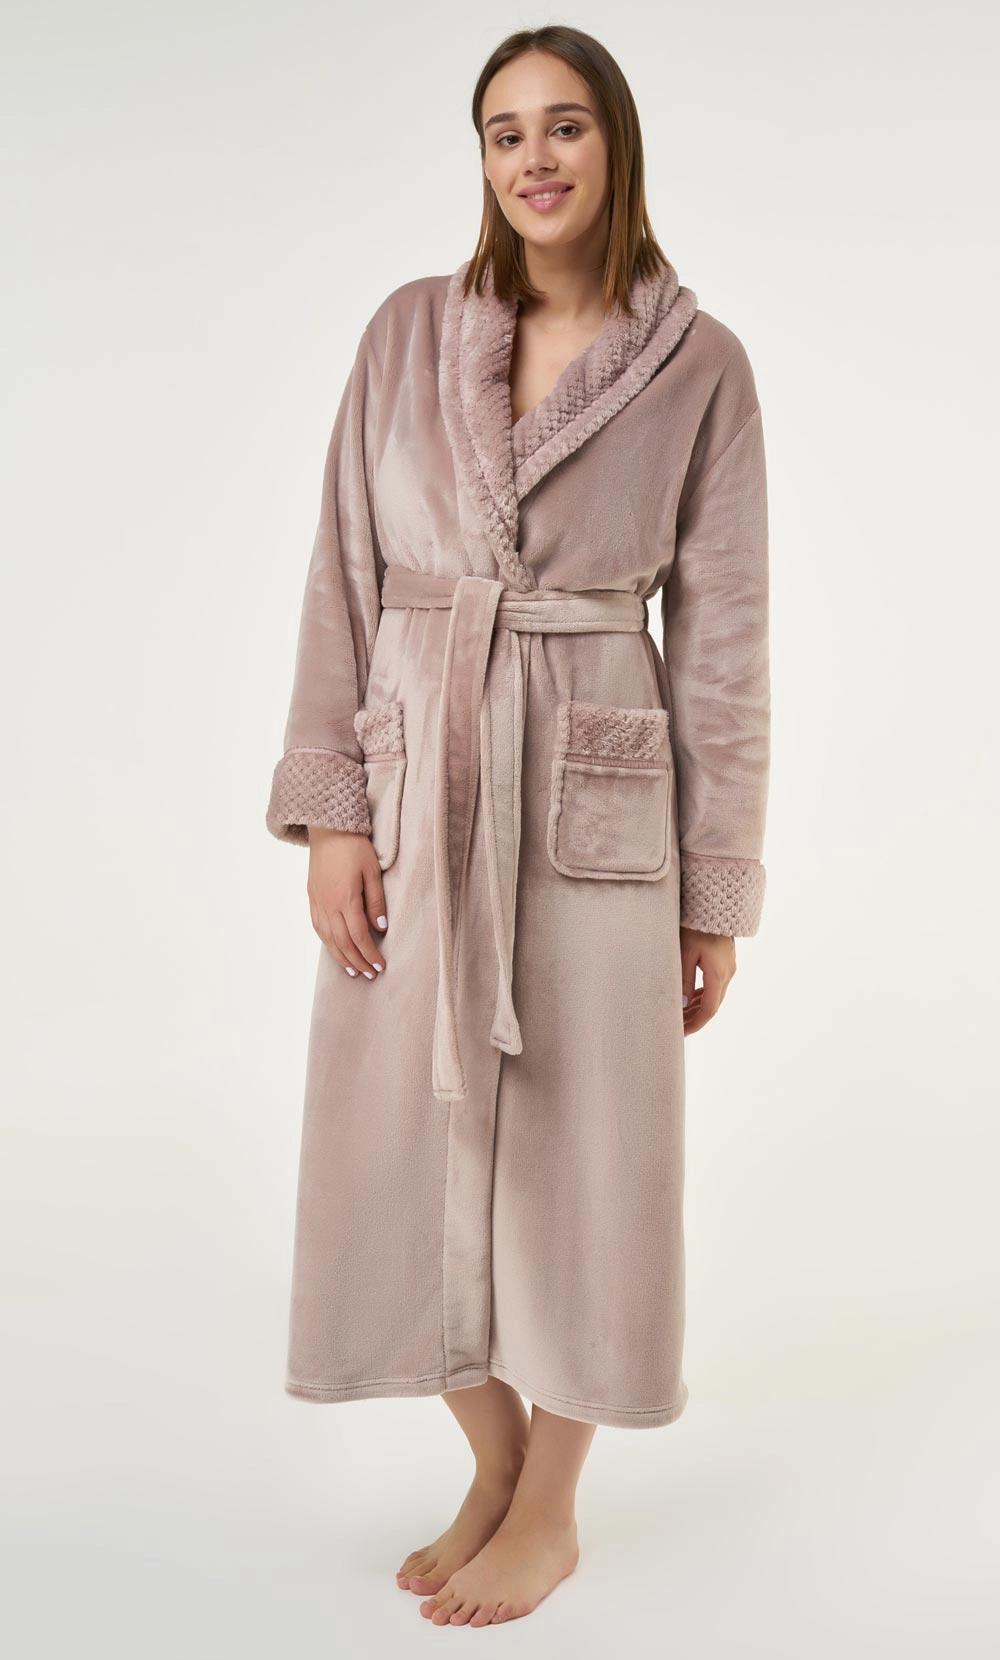 http://robemart.com/images/thumbnails/detailed/7/Pink-Plush-Soft-Warm-Fleece-Bathrobe-Comfy-Womens-Robe.webp